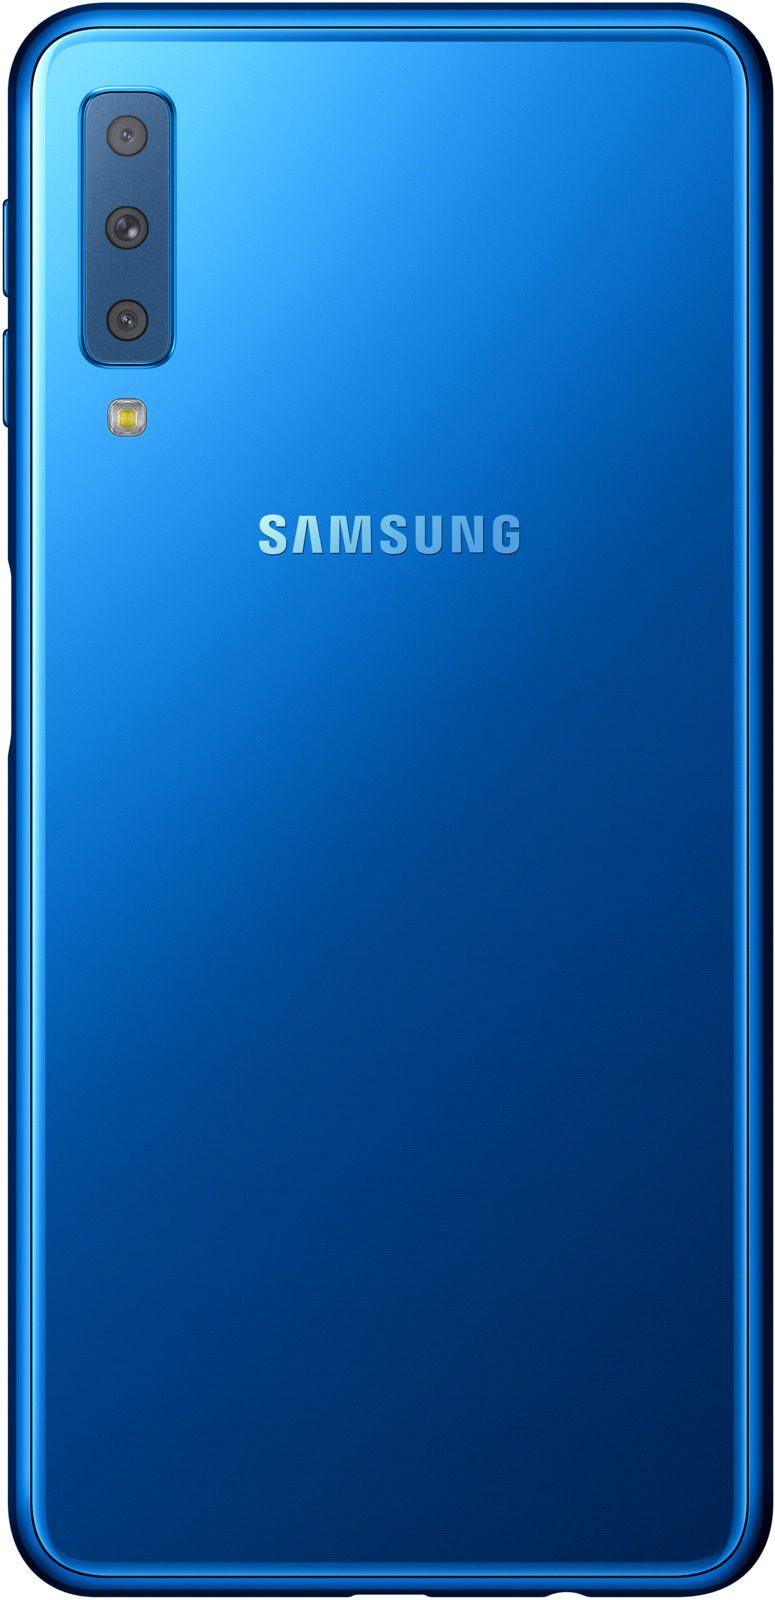 фото Смартфон Samsung Galaxy A7 2018 4 / 64 GB, синий